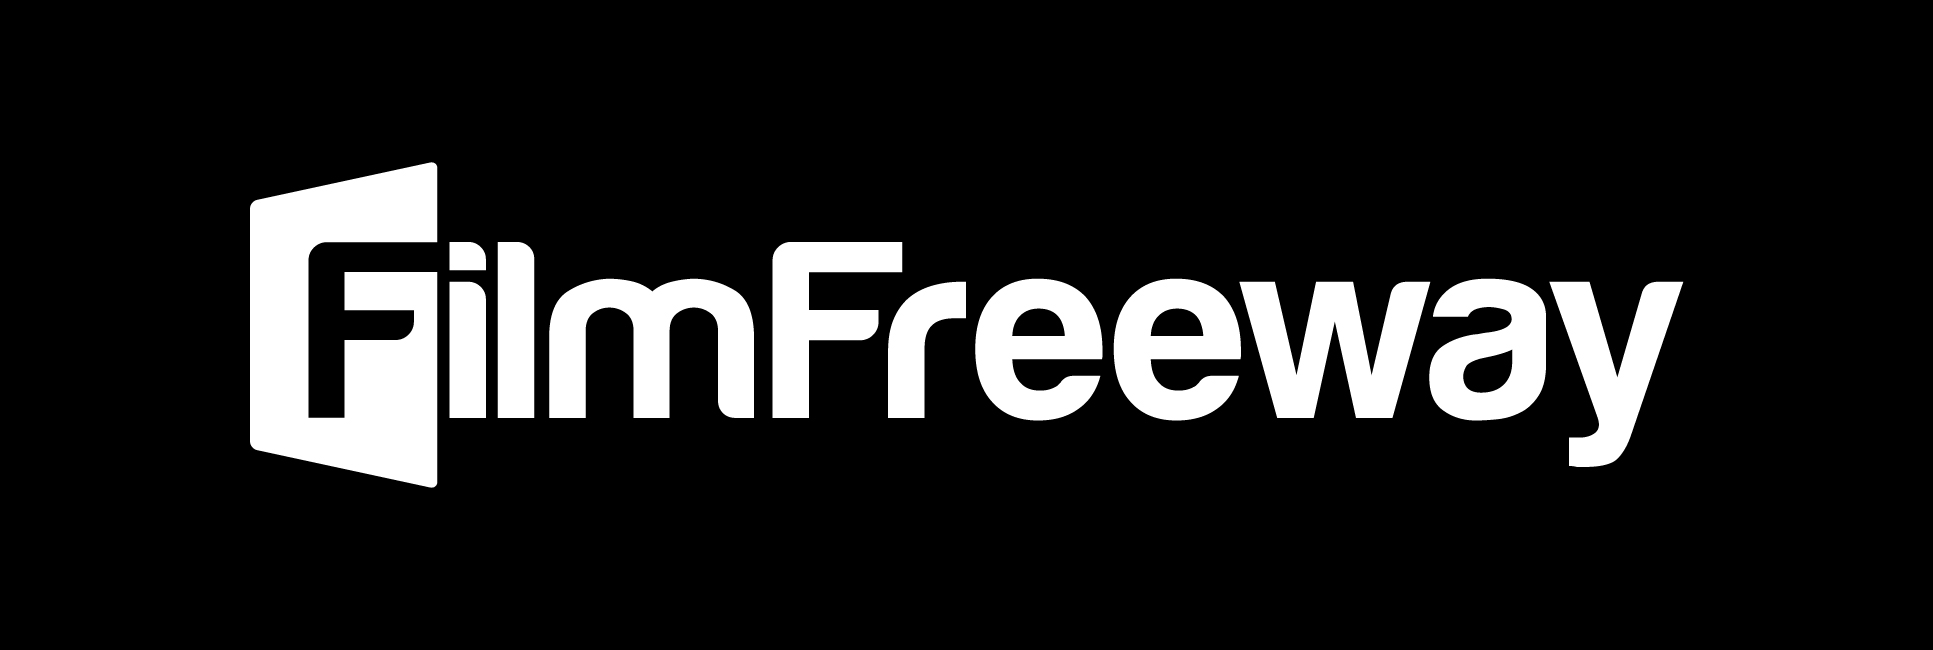 filmfreeway-logo-black